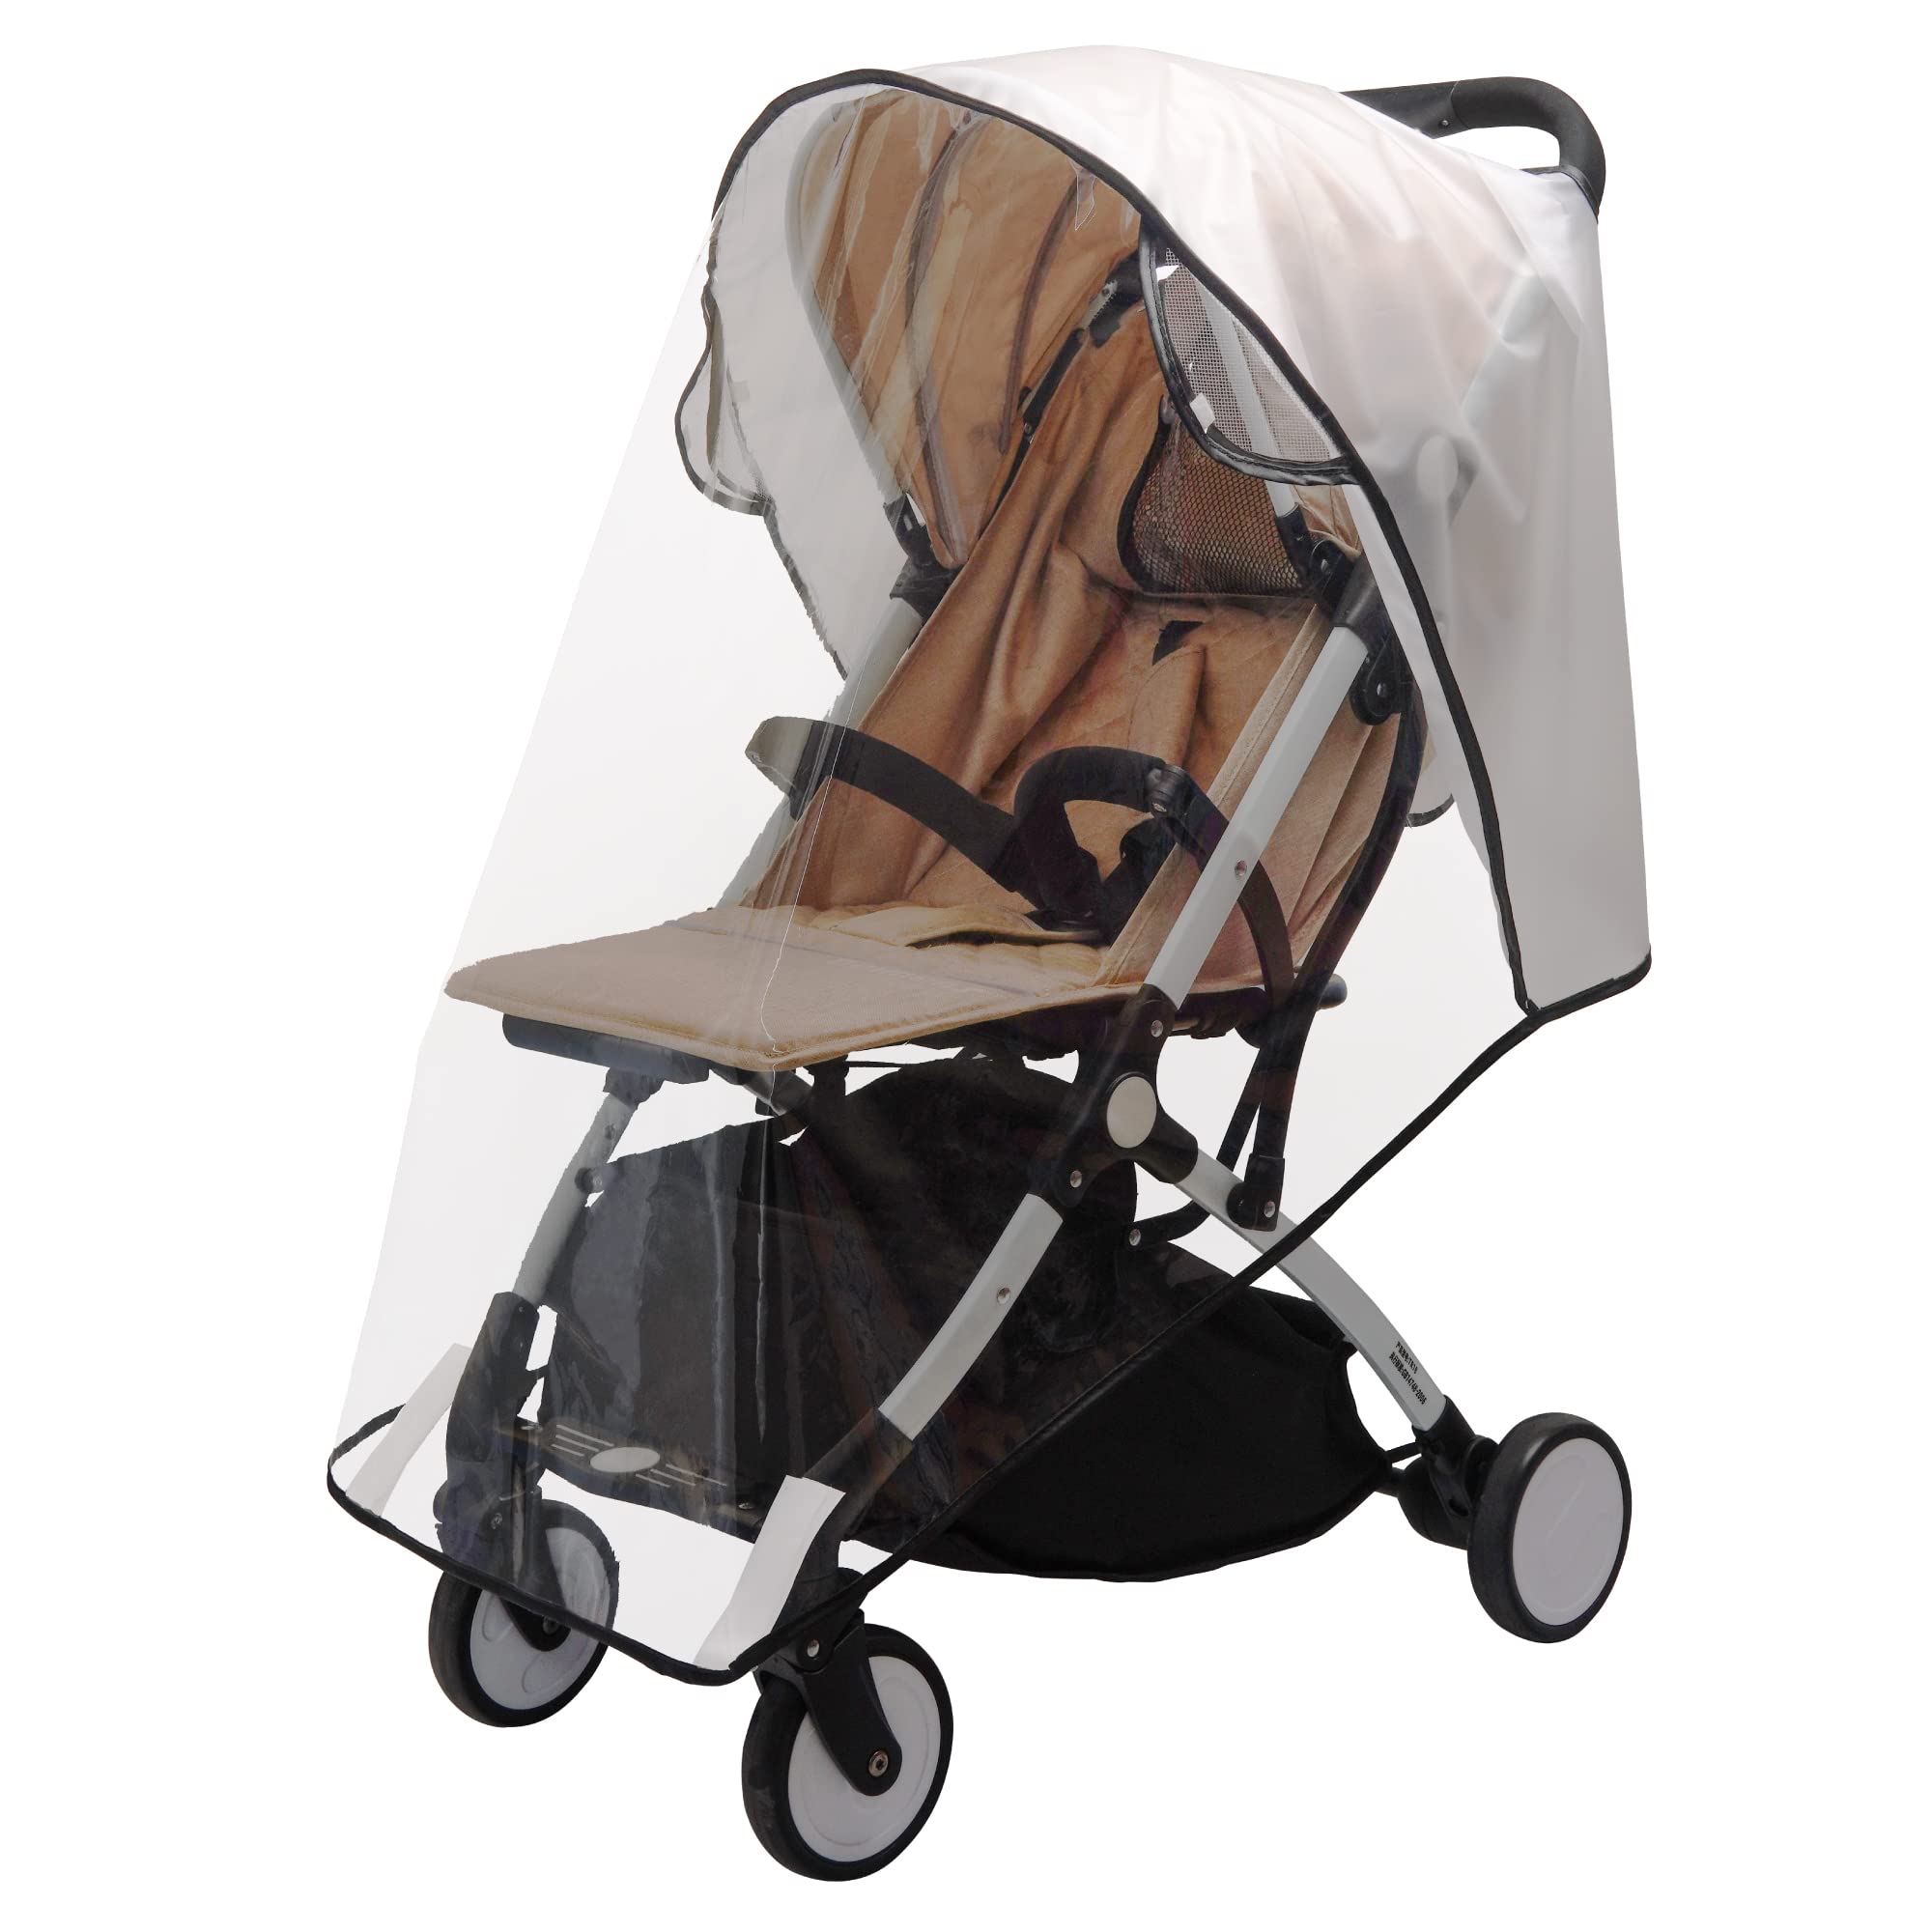 Bemece Universal Rain Cover for Pushchair Stroller Buggy Pram, Baby Travel Weather Shield